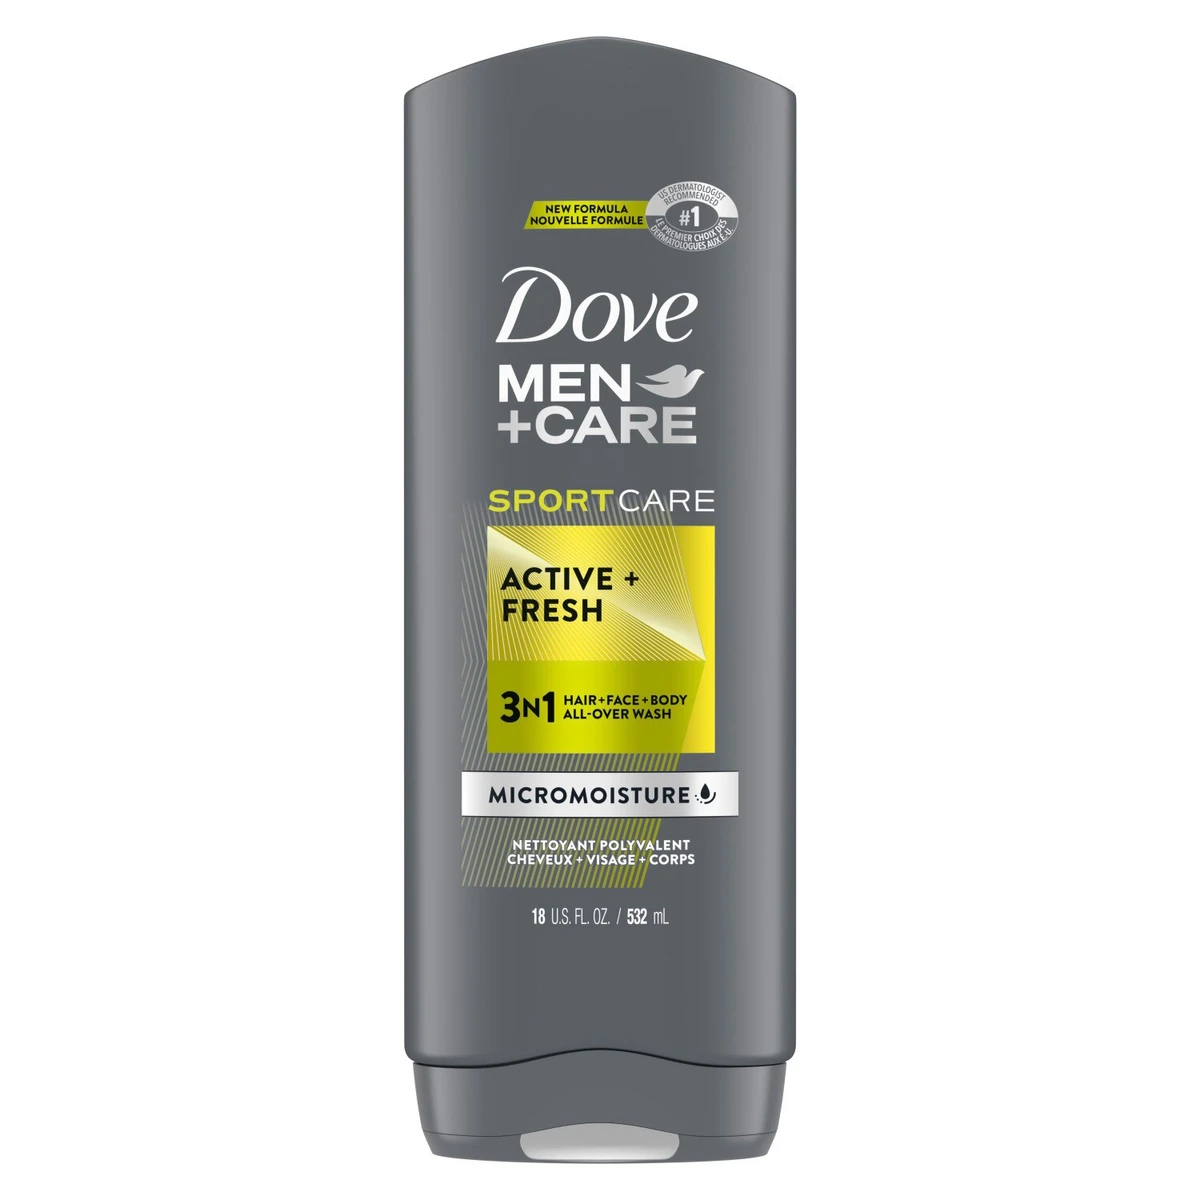 Dove Men+Care Sport Care Active + Fresh Micro Moisture Strengthening Body Wash  18 fl oz